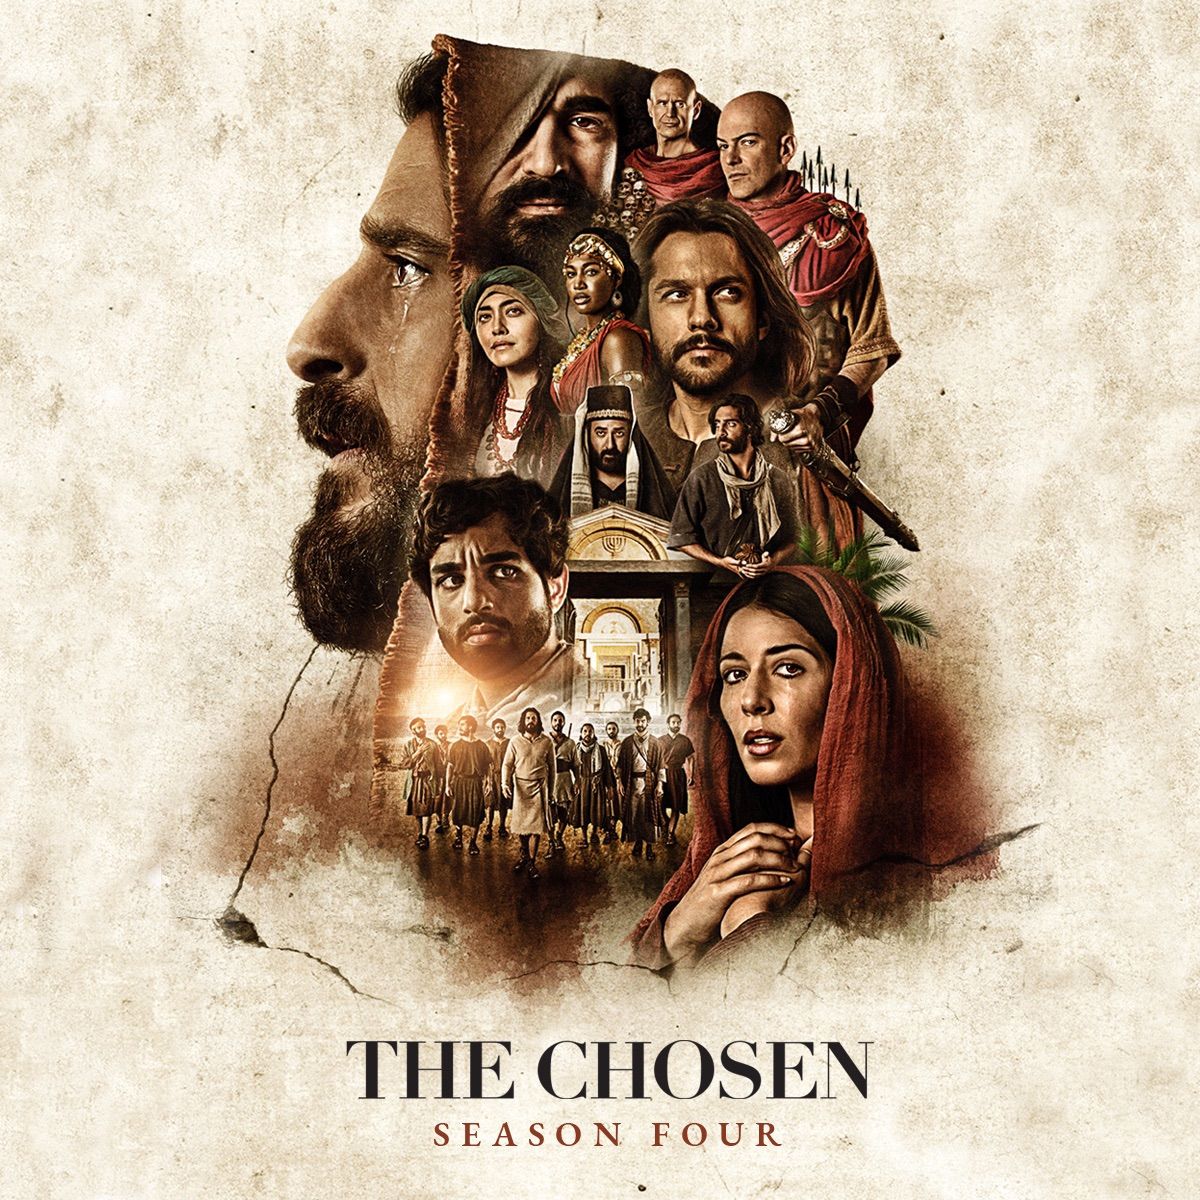 THE CHOSEN S4 Screening | Episodes 1 & 2